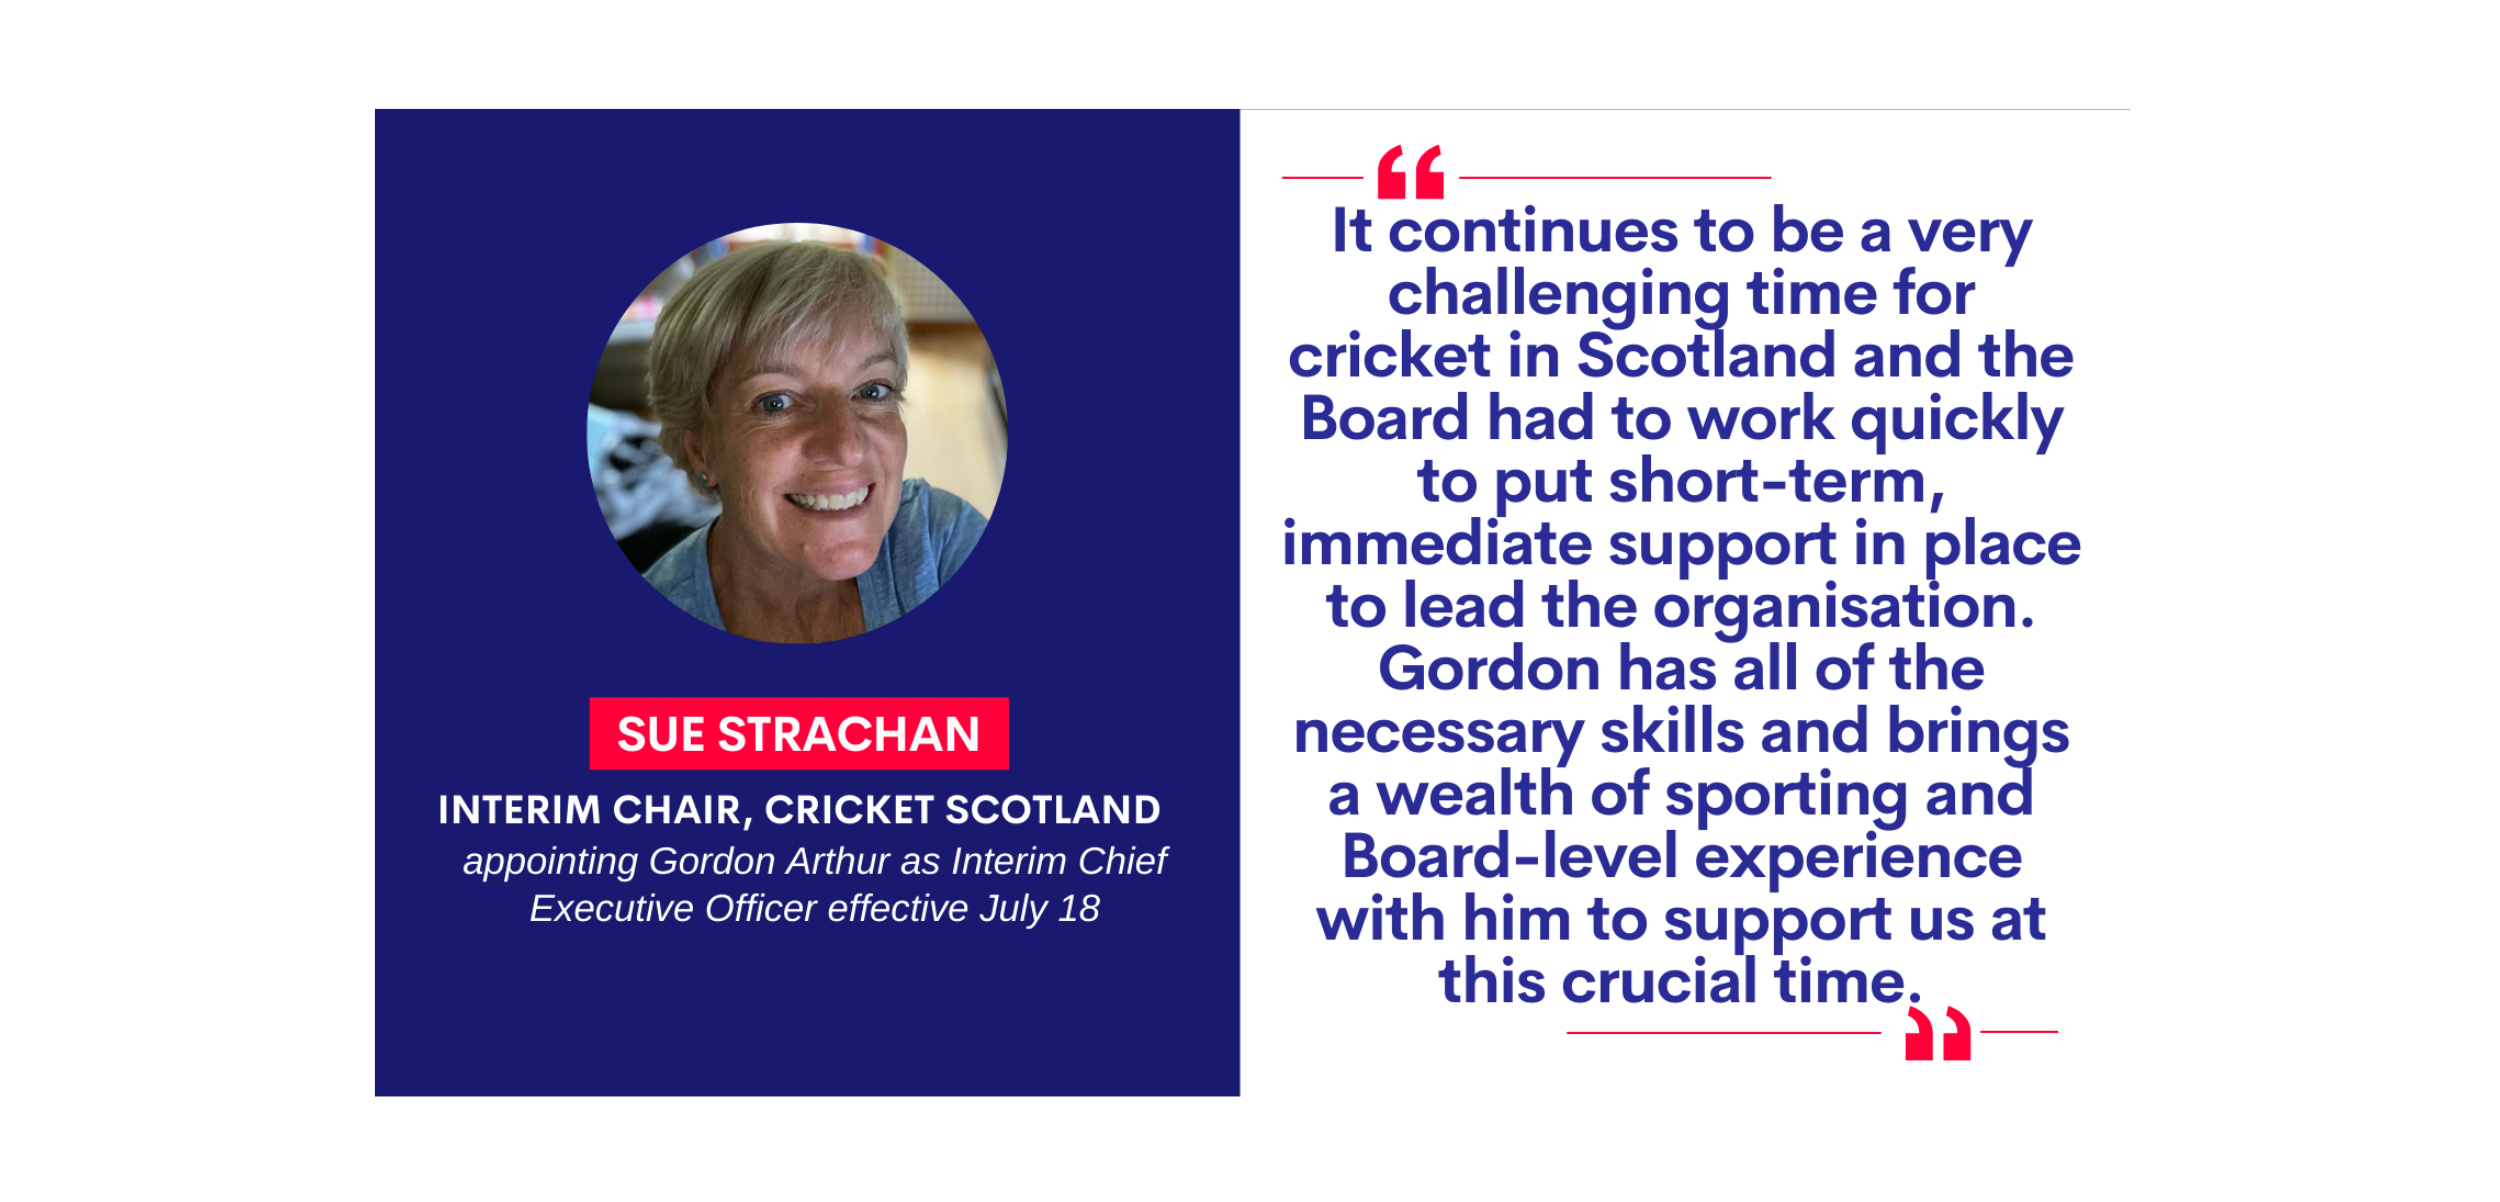 Sue Strachan, Interim Chair, Cricket Scotland appointing Gordon Arthur as Interim Chief Executive Officer effective July 18